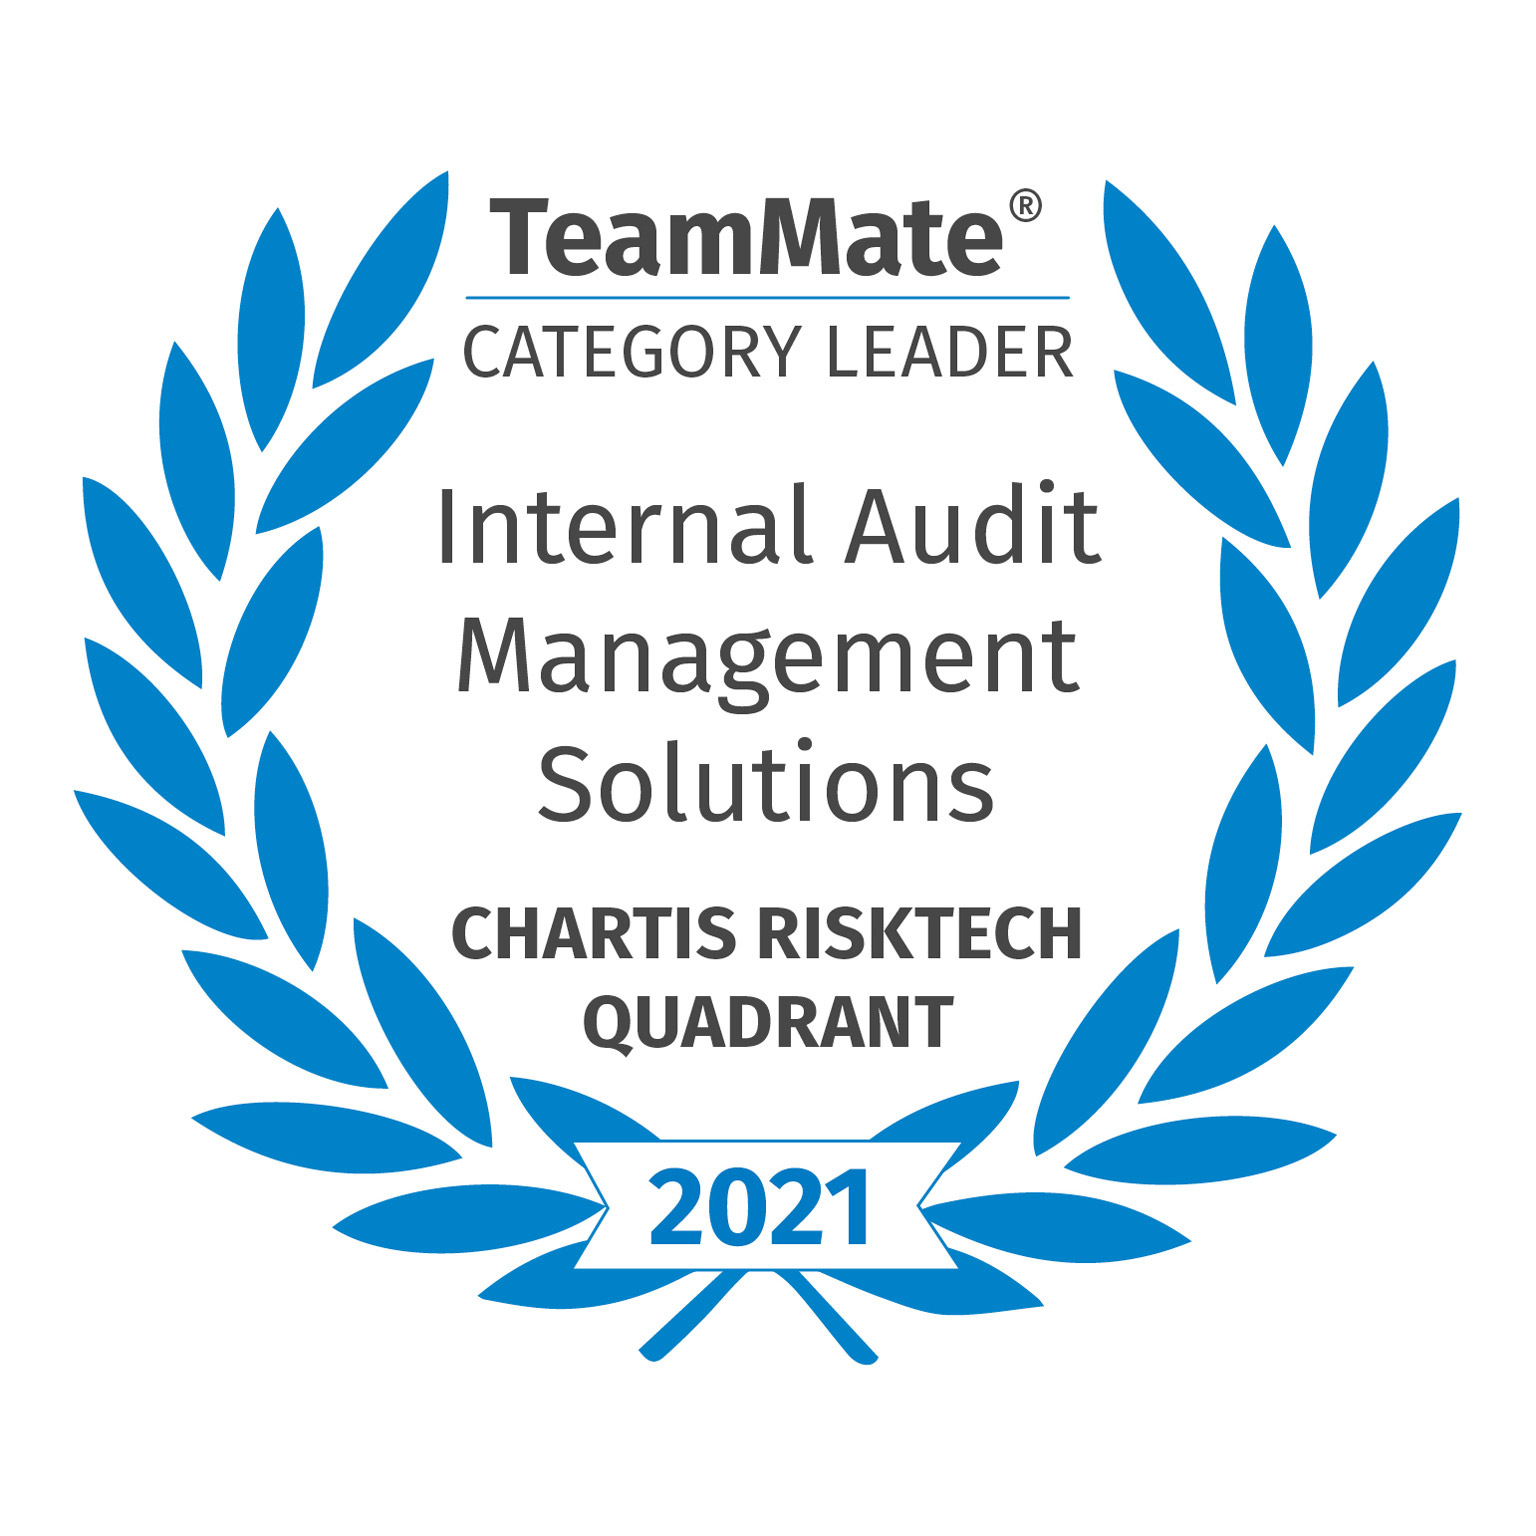 TeamMate Chartis Risktech Quadrant 2021 Category Leader Internal Audit Management Solutions